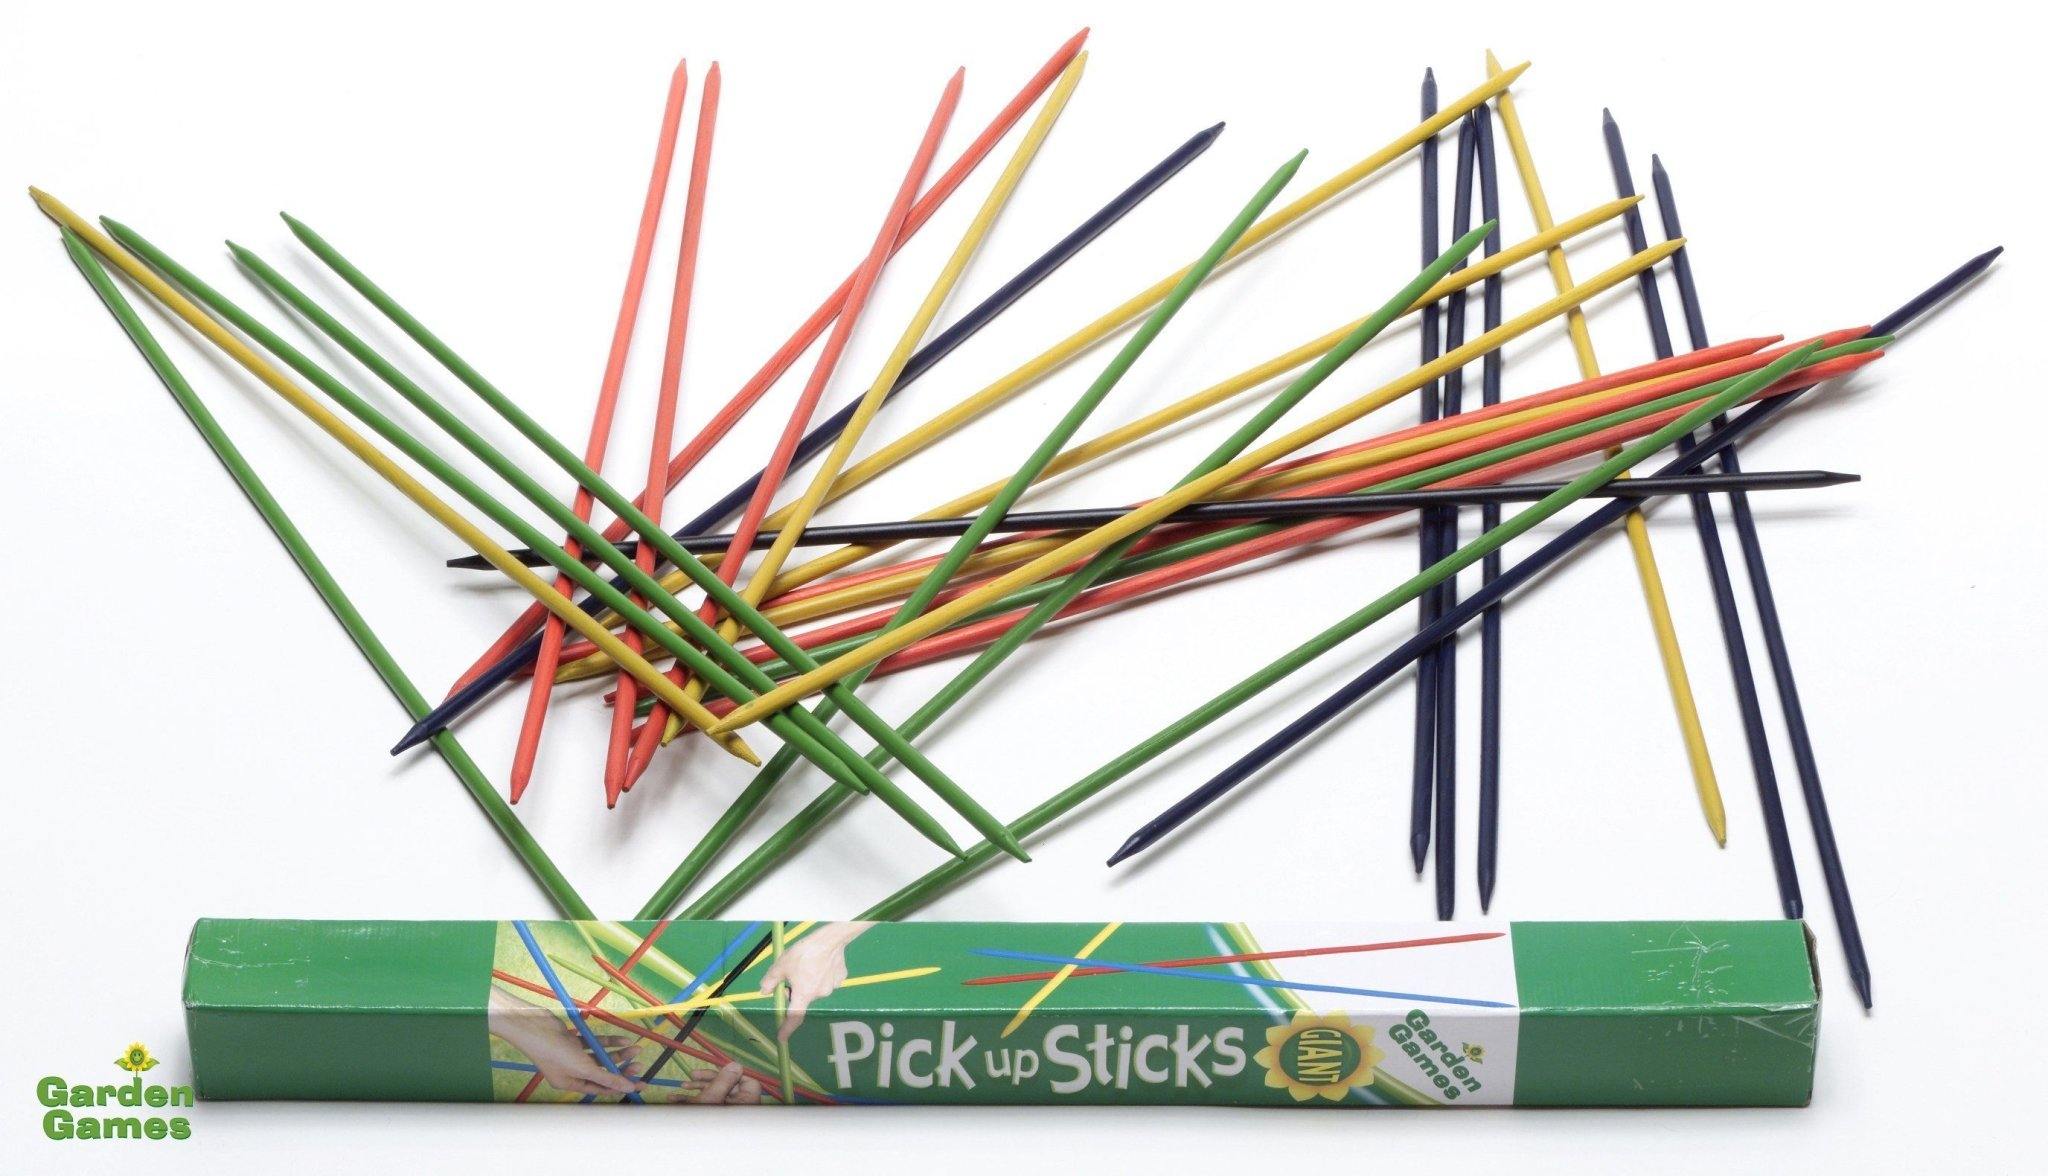 Giant Pick Up Sticks - DTI Direct USA